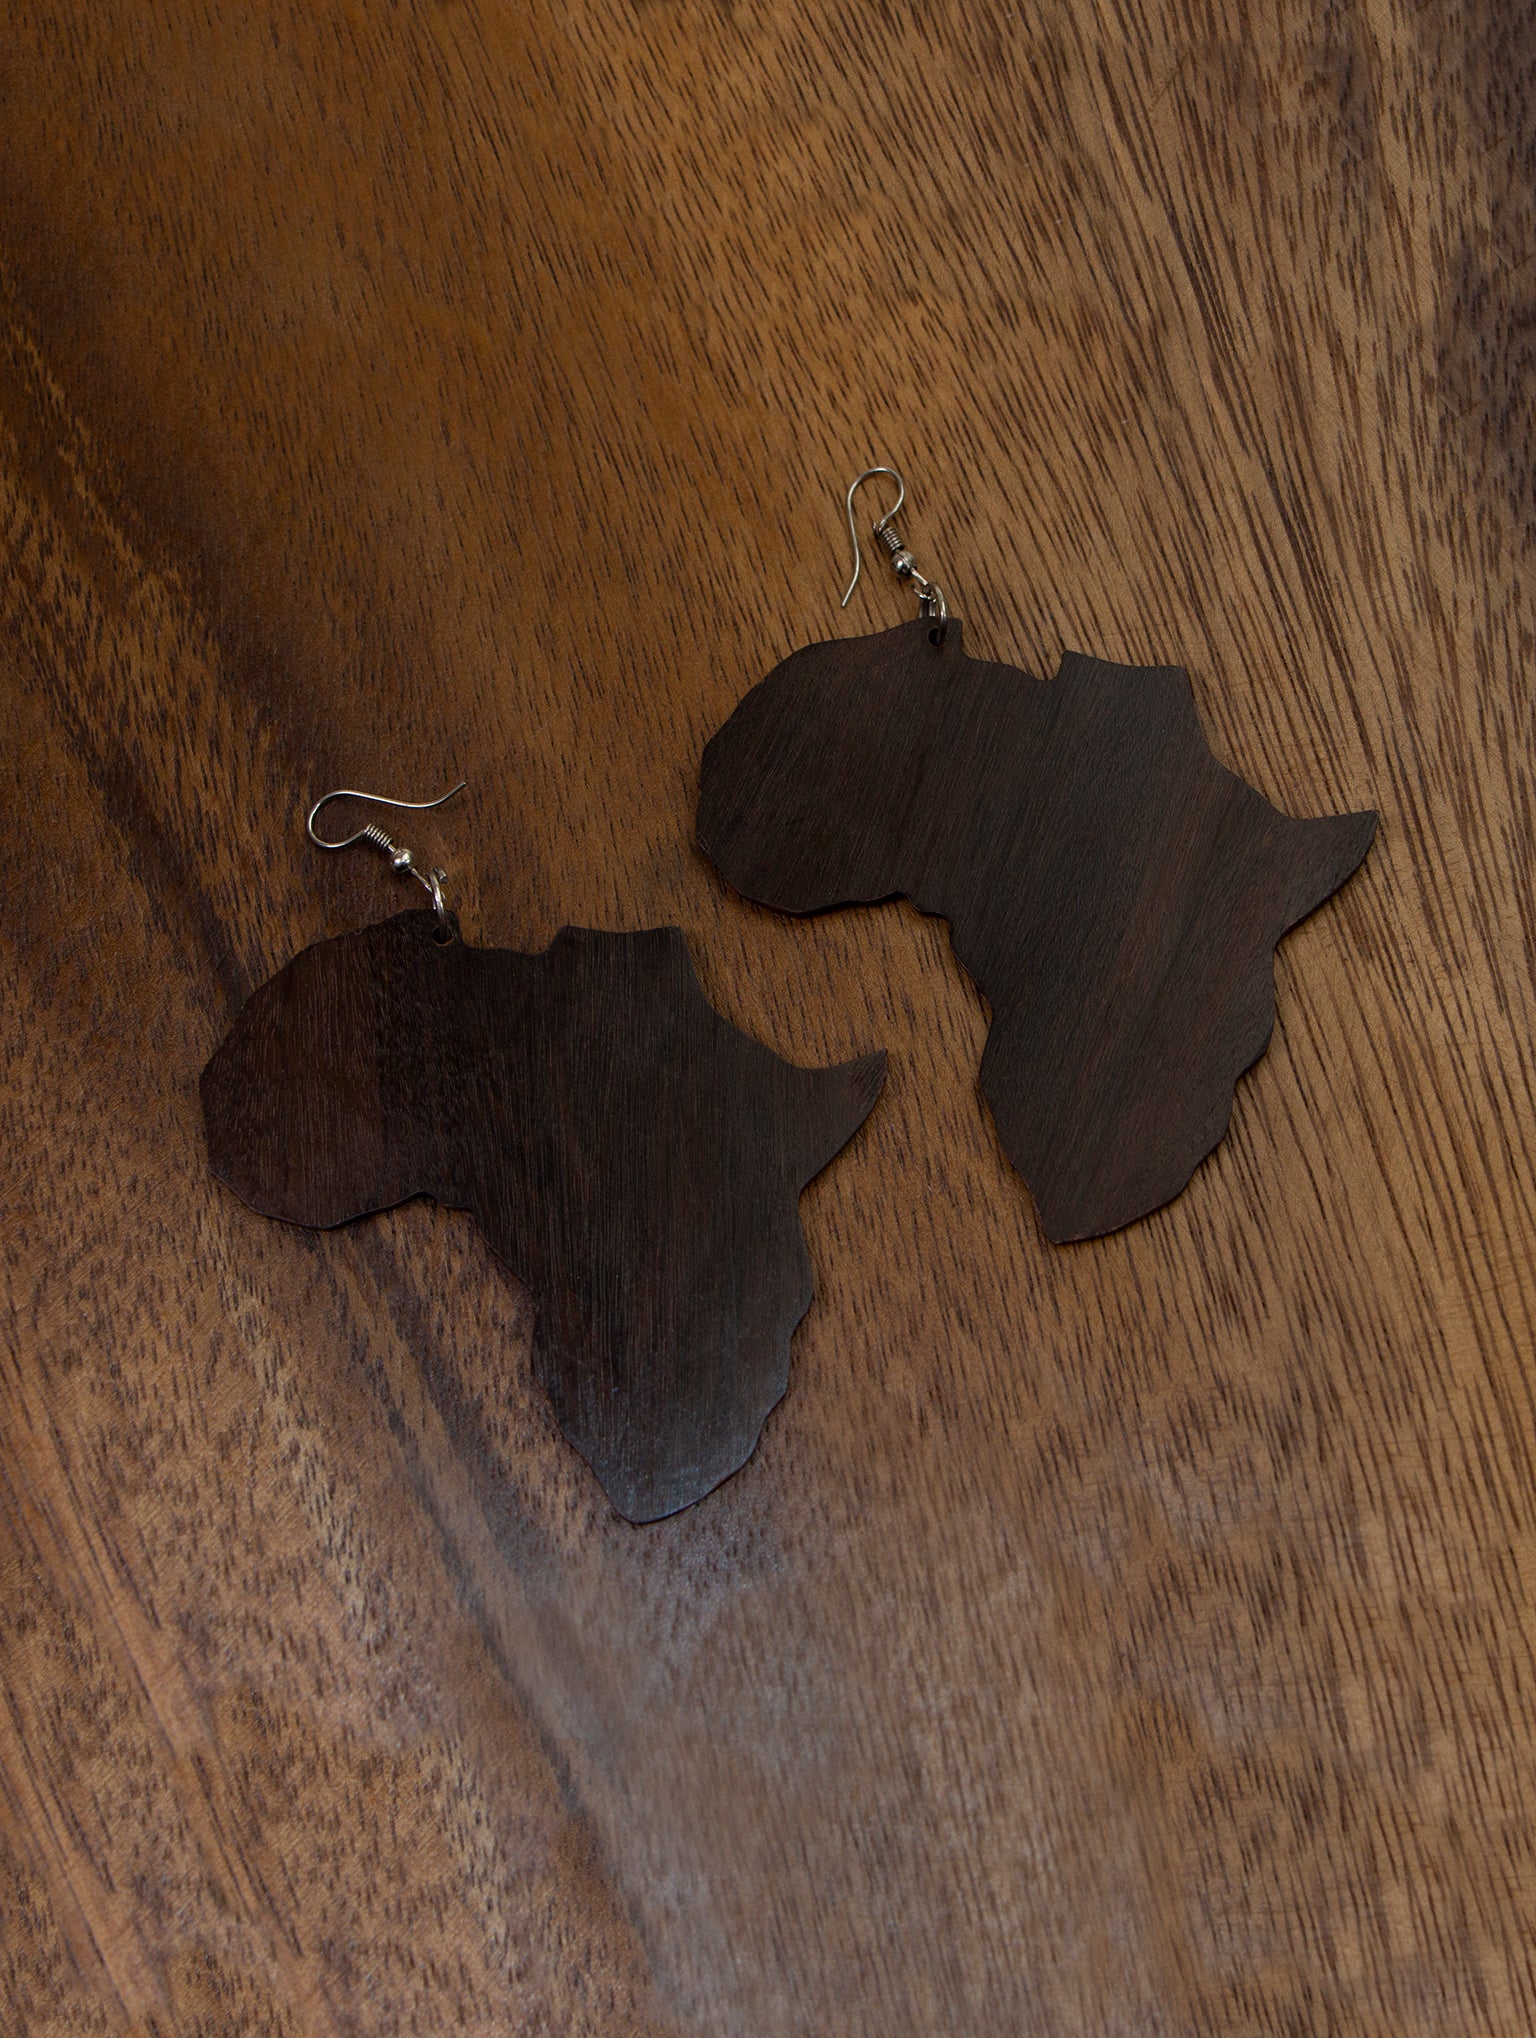 Small Africa Earrings